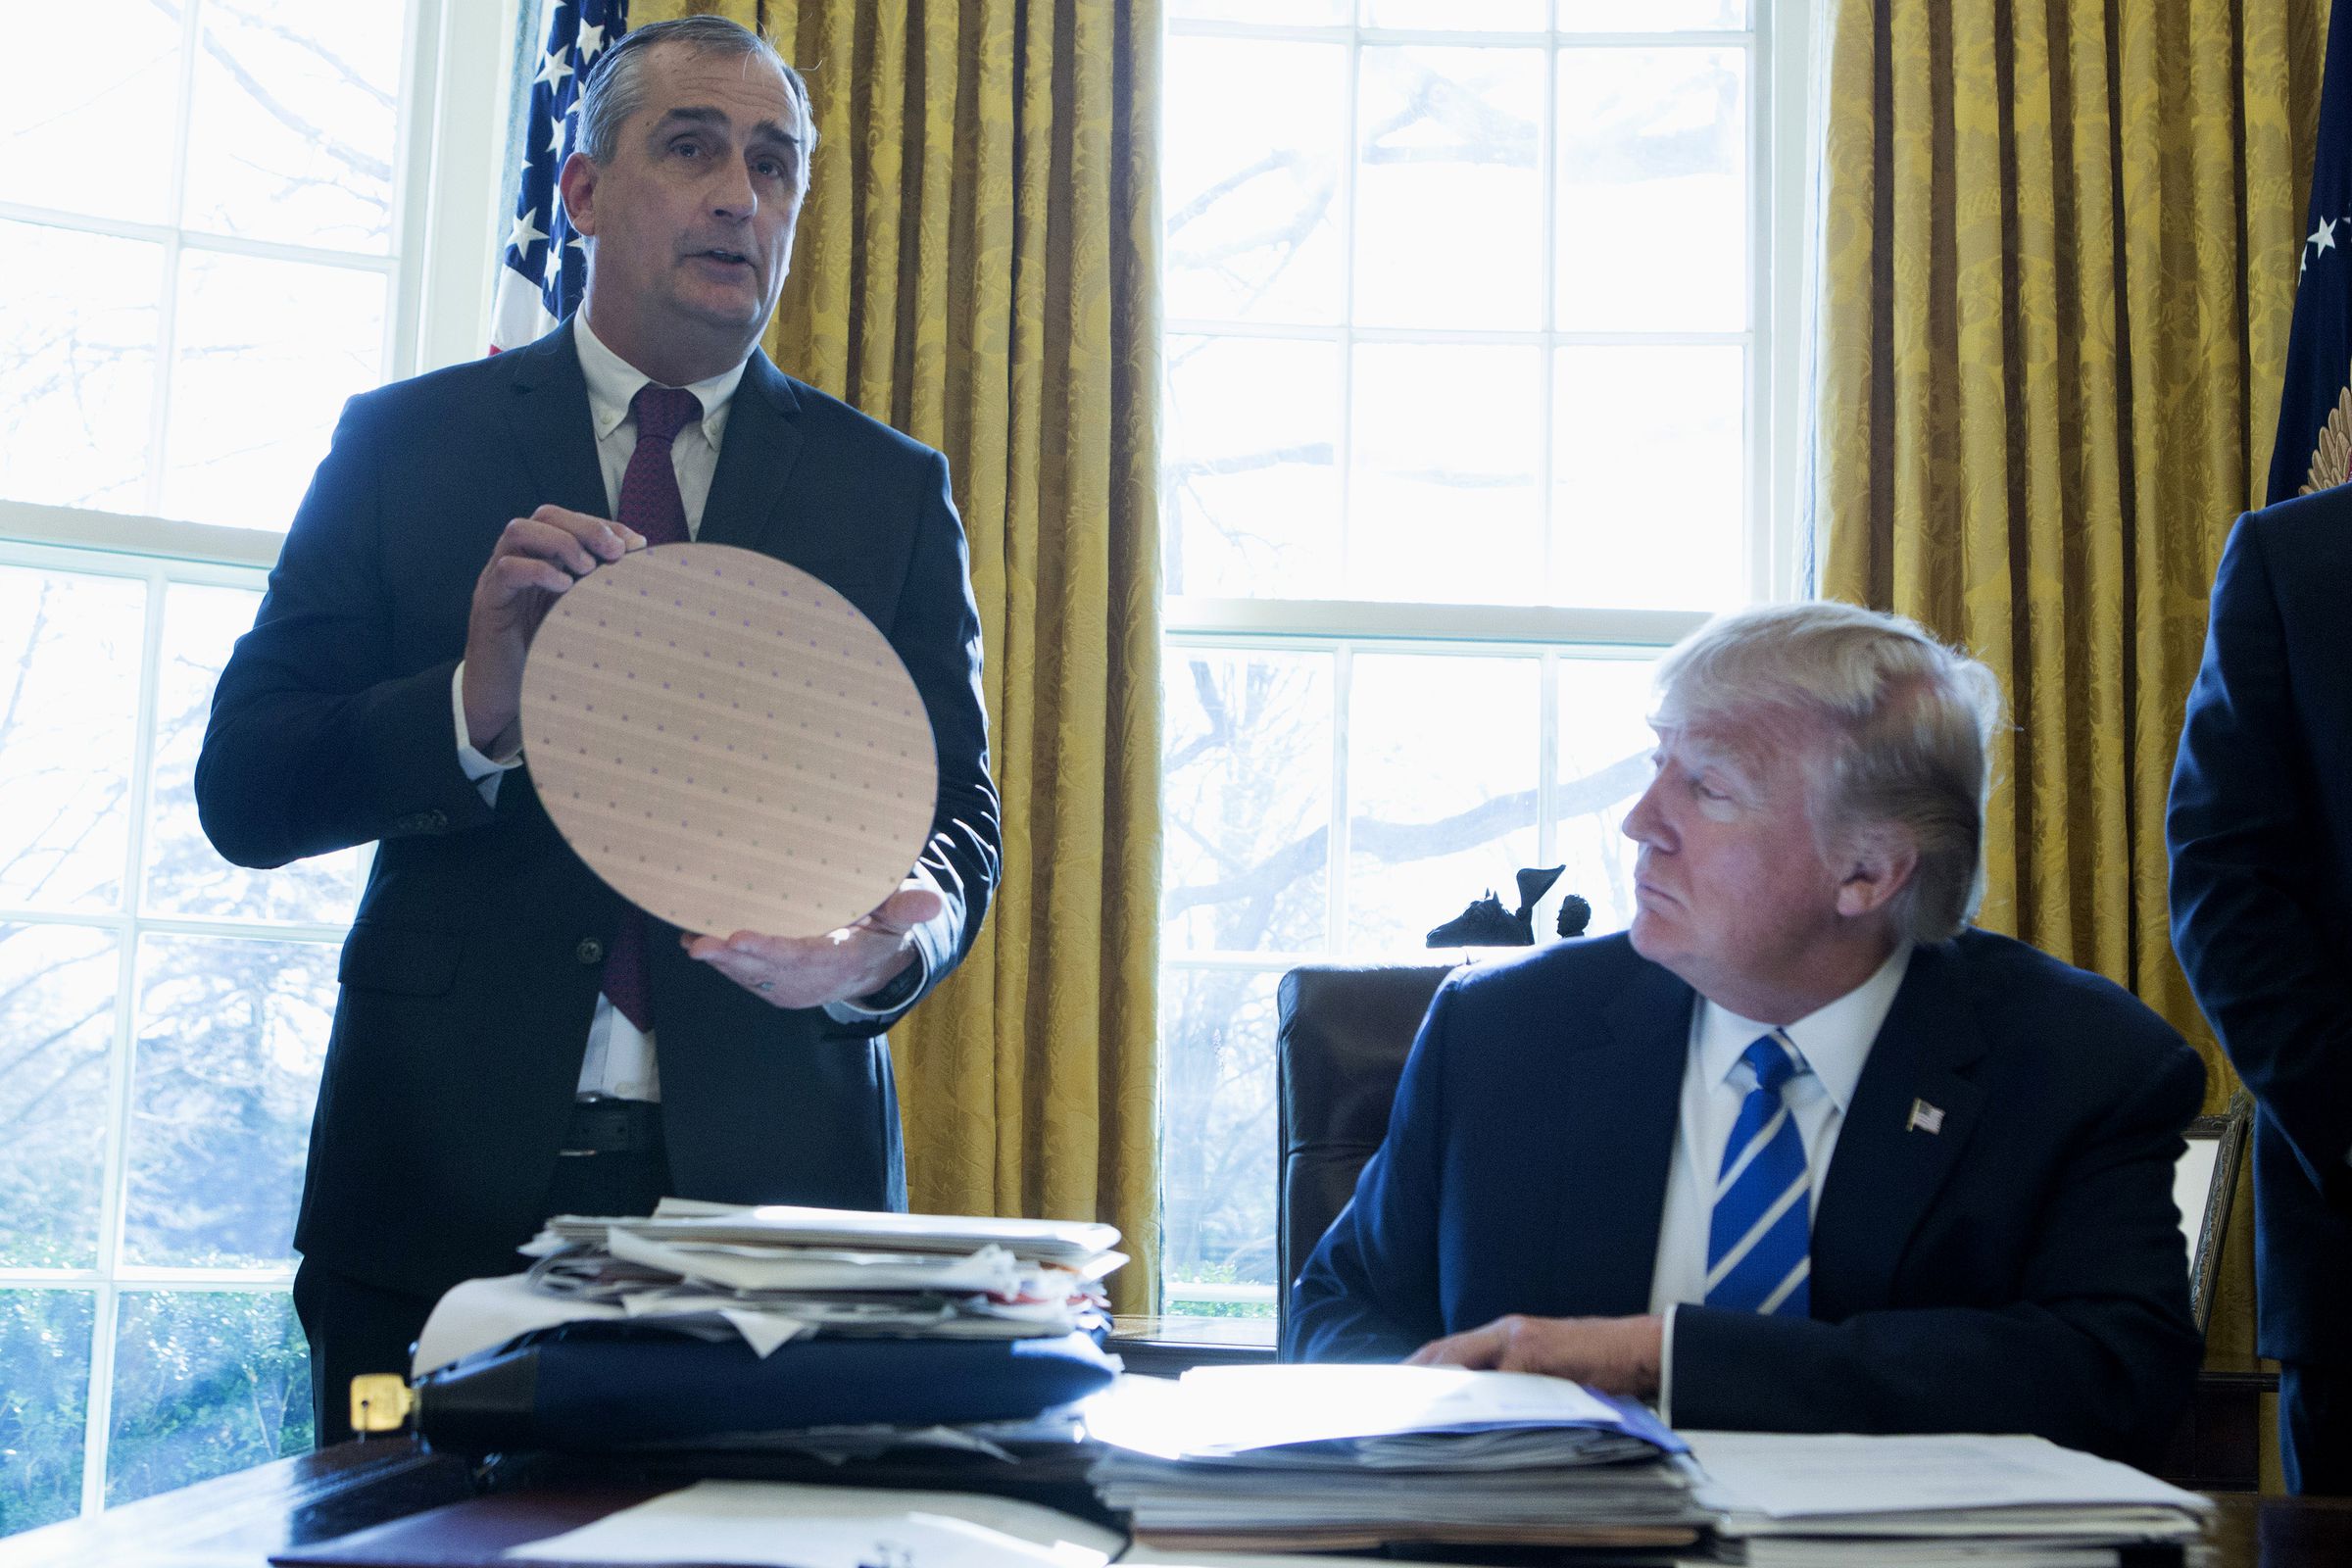 President Trump Meets With Intel CEO Brian Krzanich